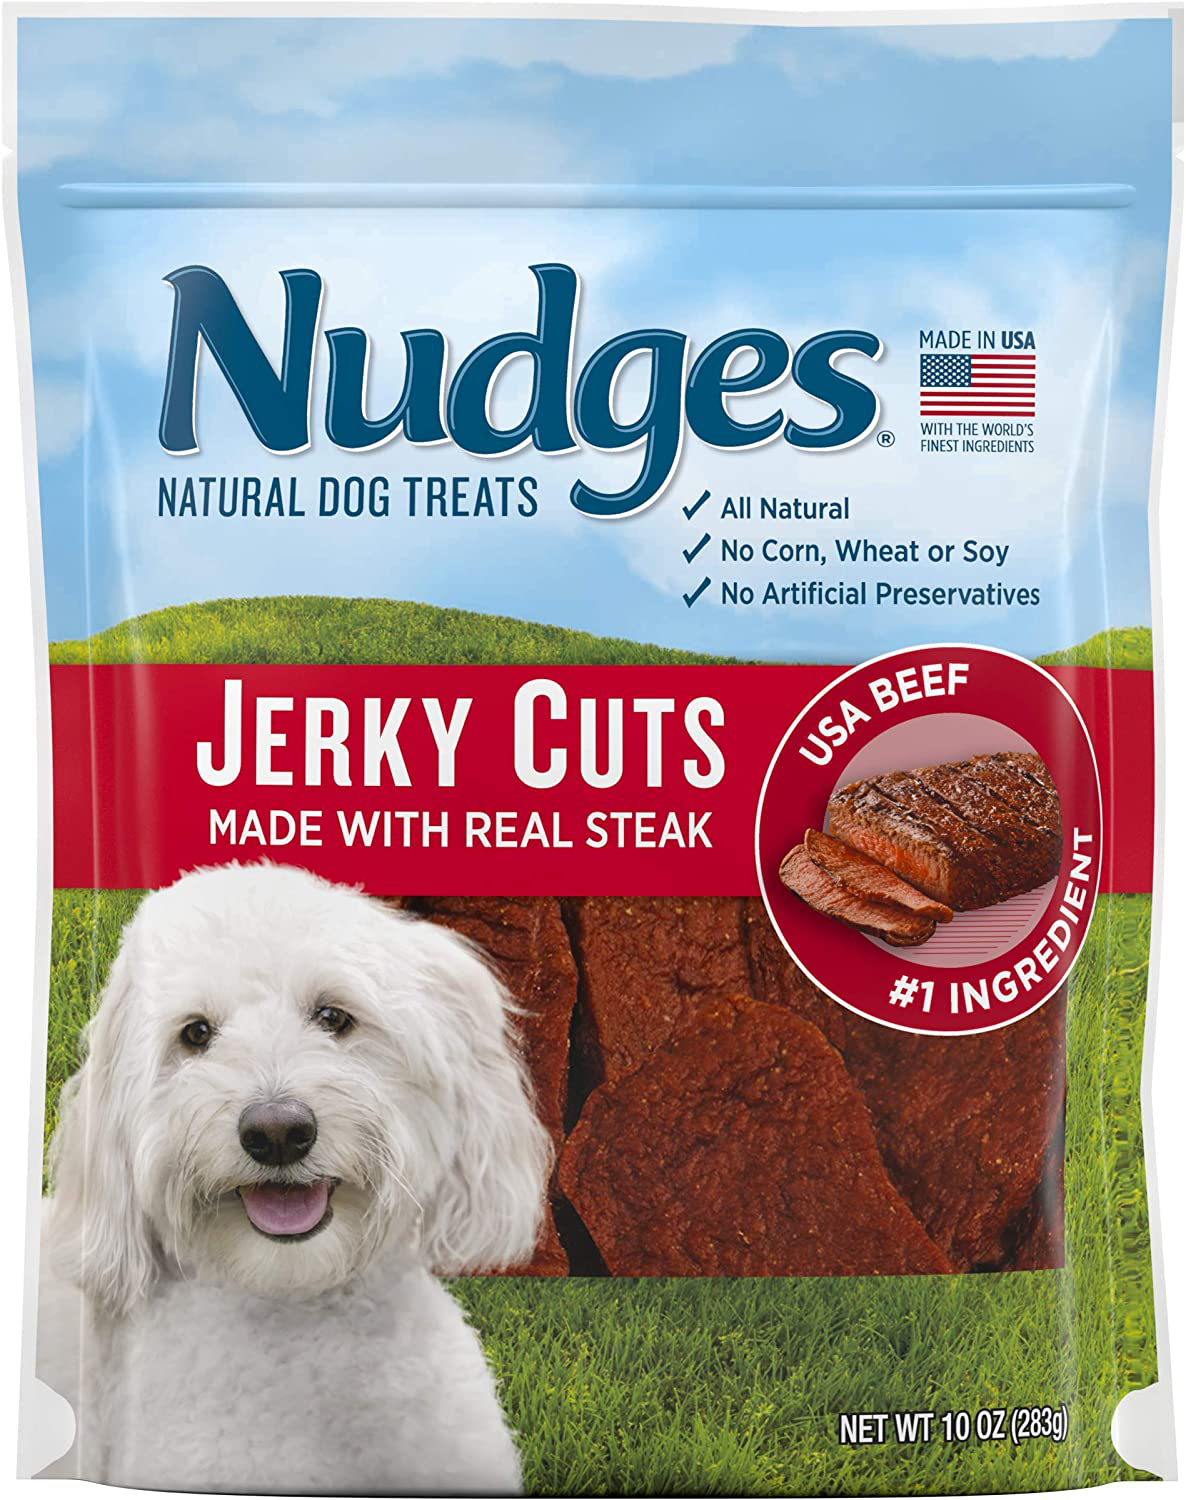 Nudges Natural Dog Treats Jerky Cuts Made with Real Steak Animals & Pet Supplies > Pet Supplies > Dog Supplies > Dog Treats Nudges 10 Ounce (Pack of 1)  